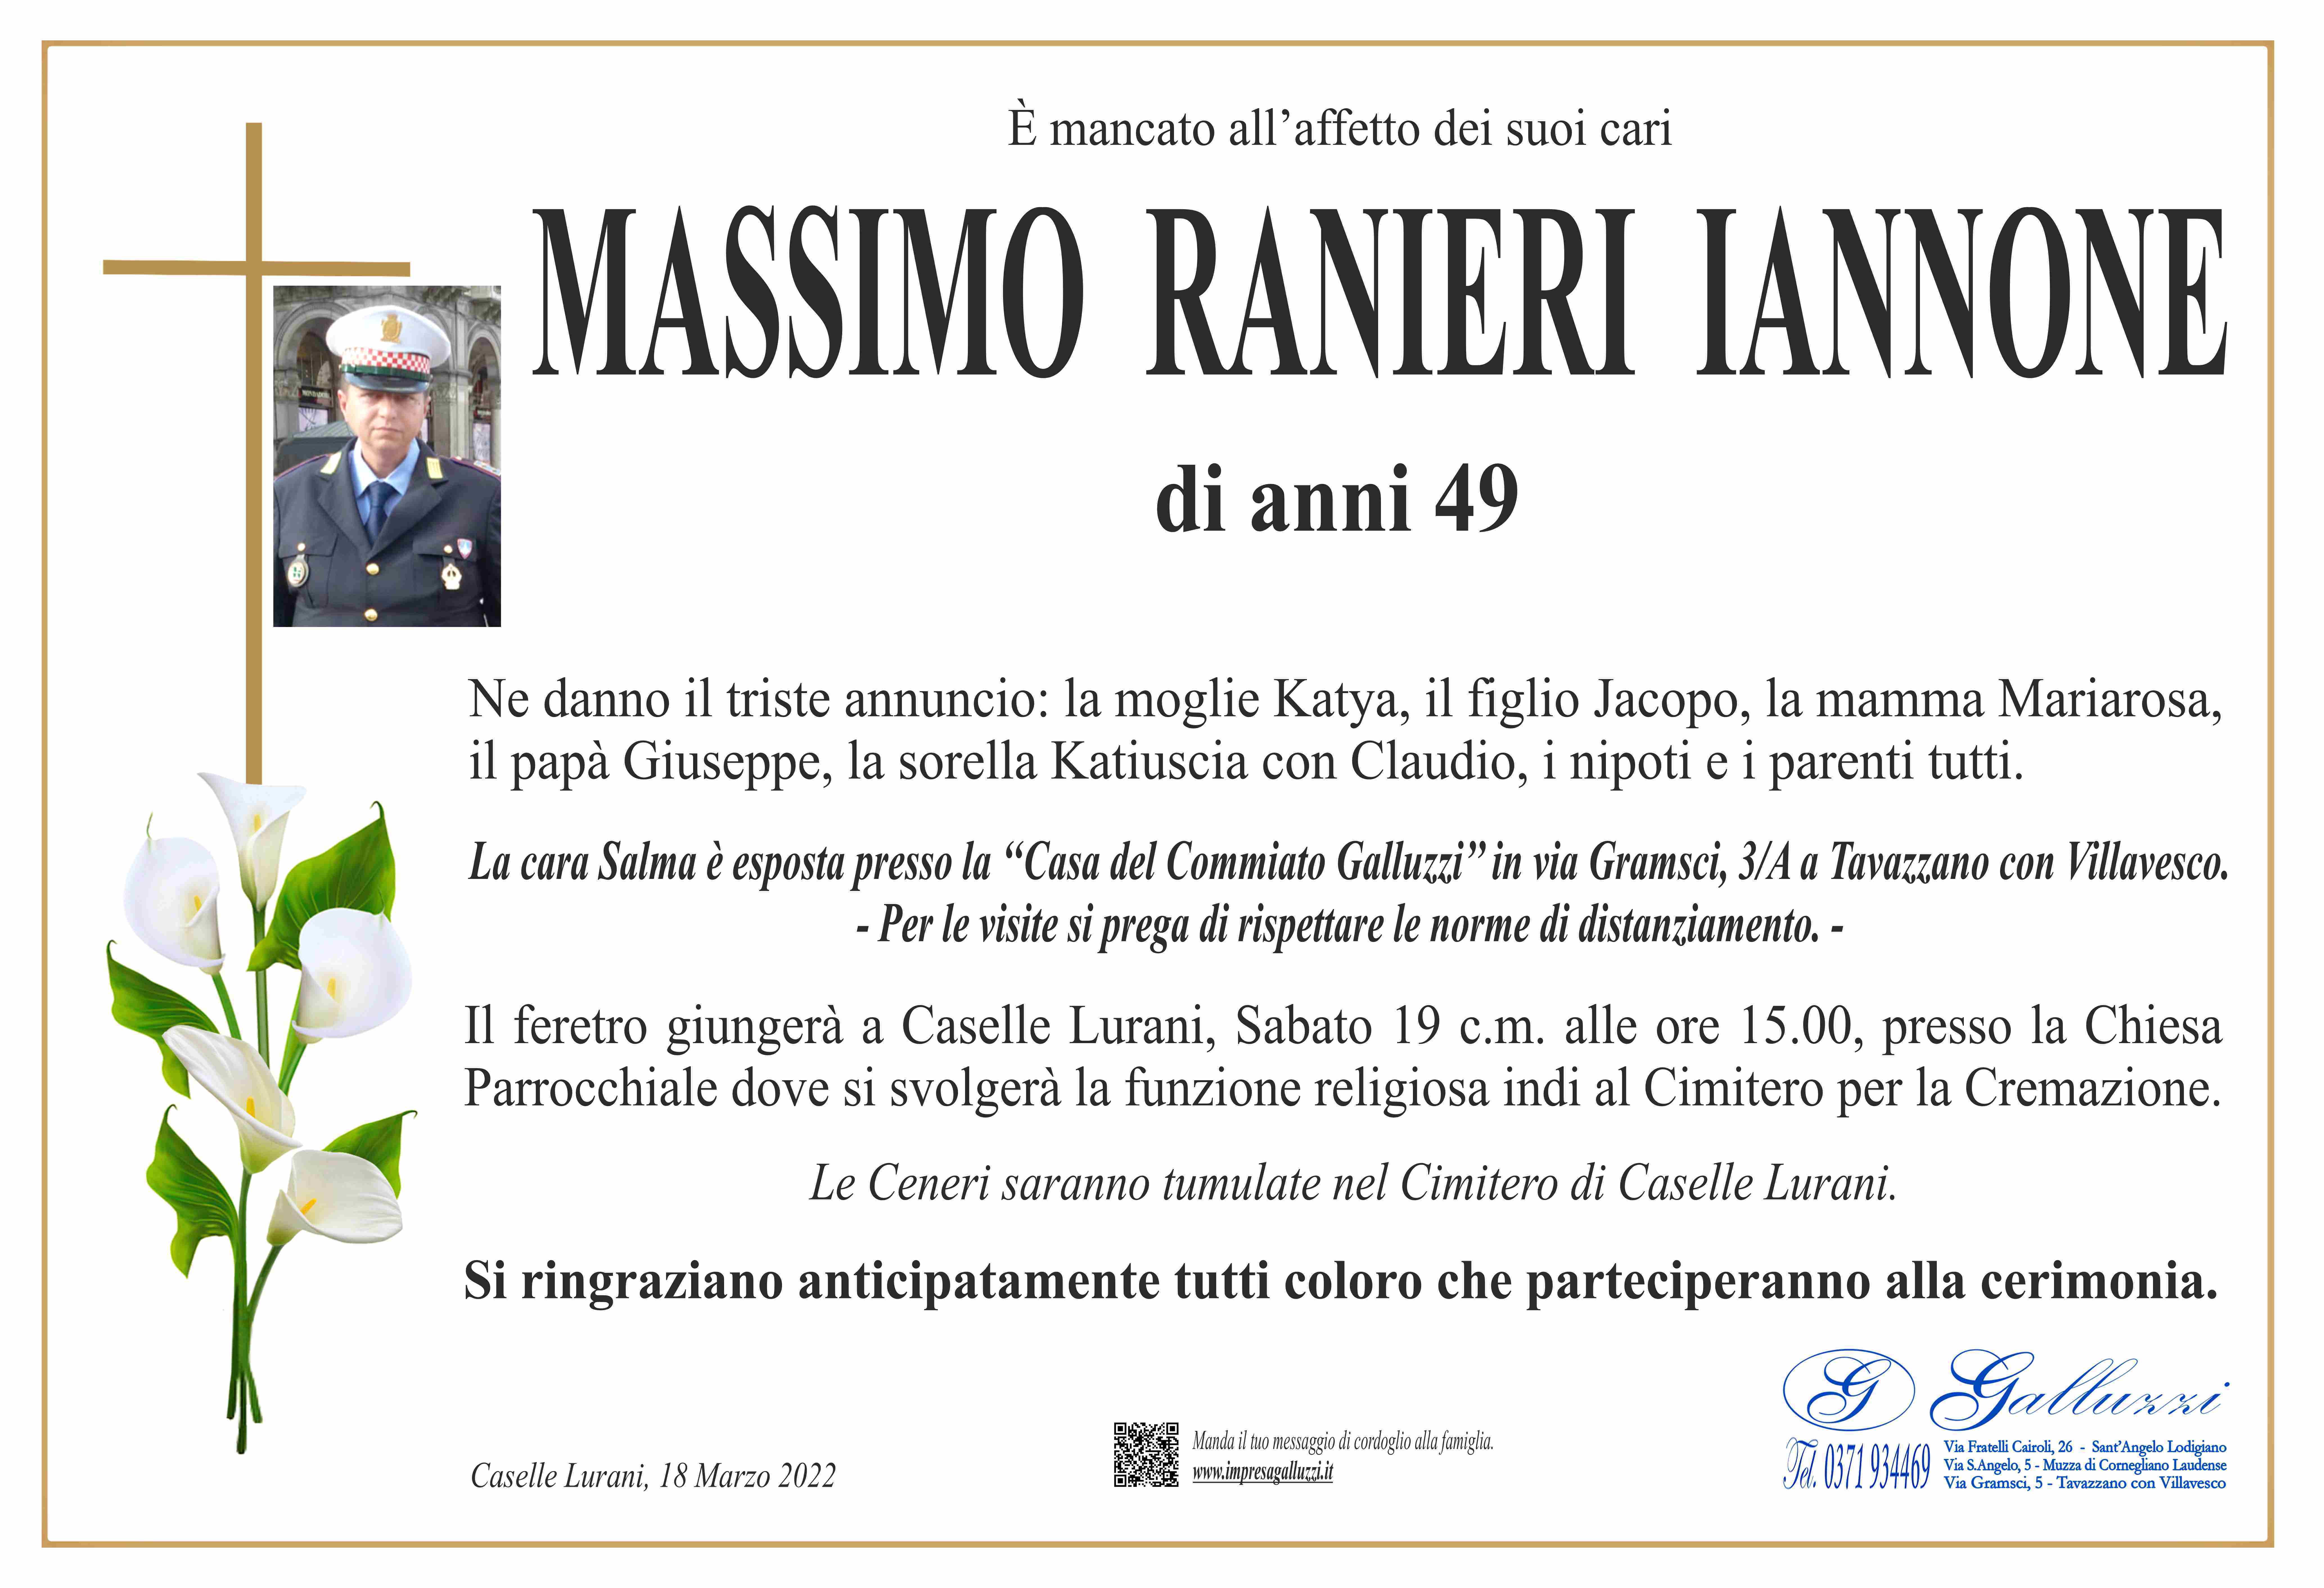 Massimo Ranieri Iannone